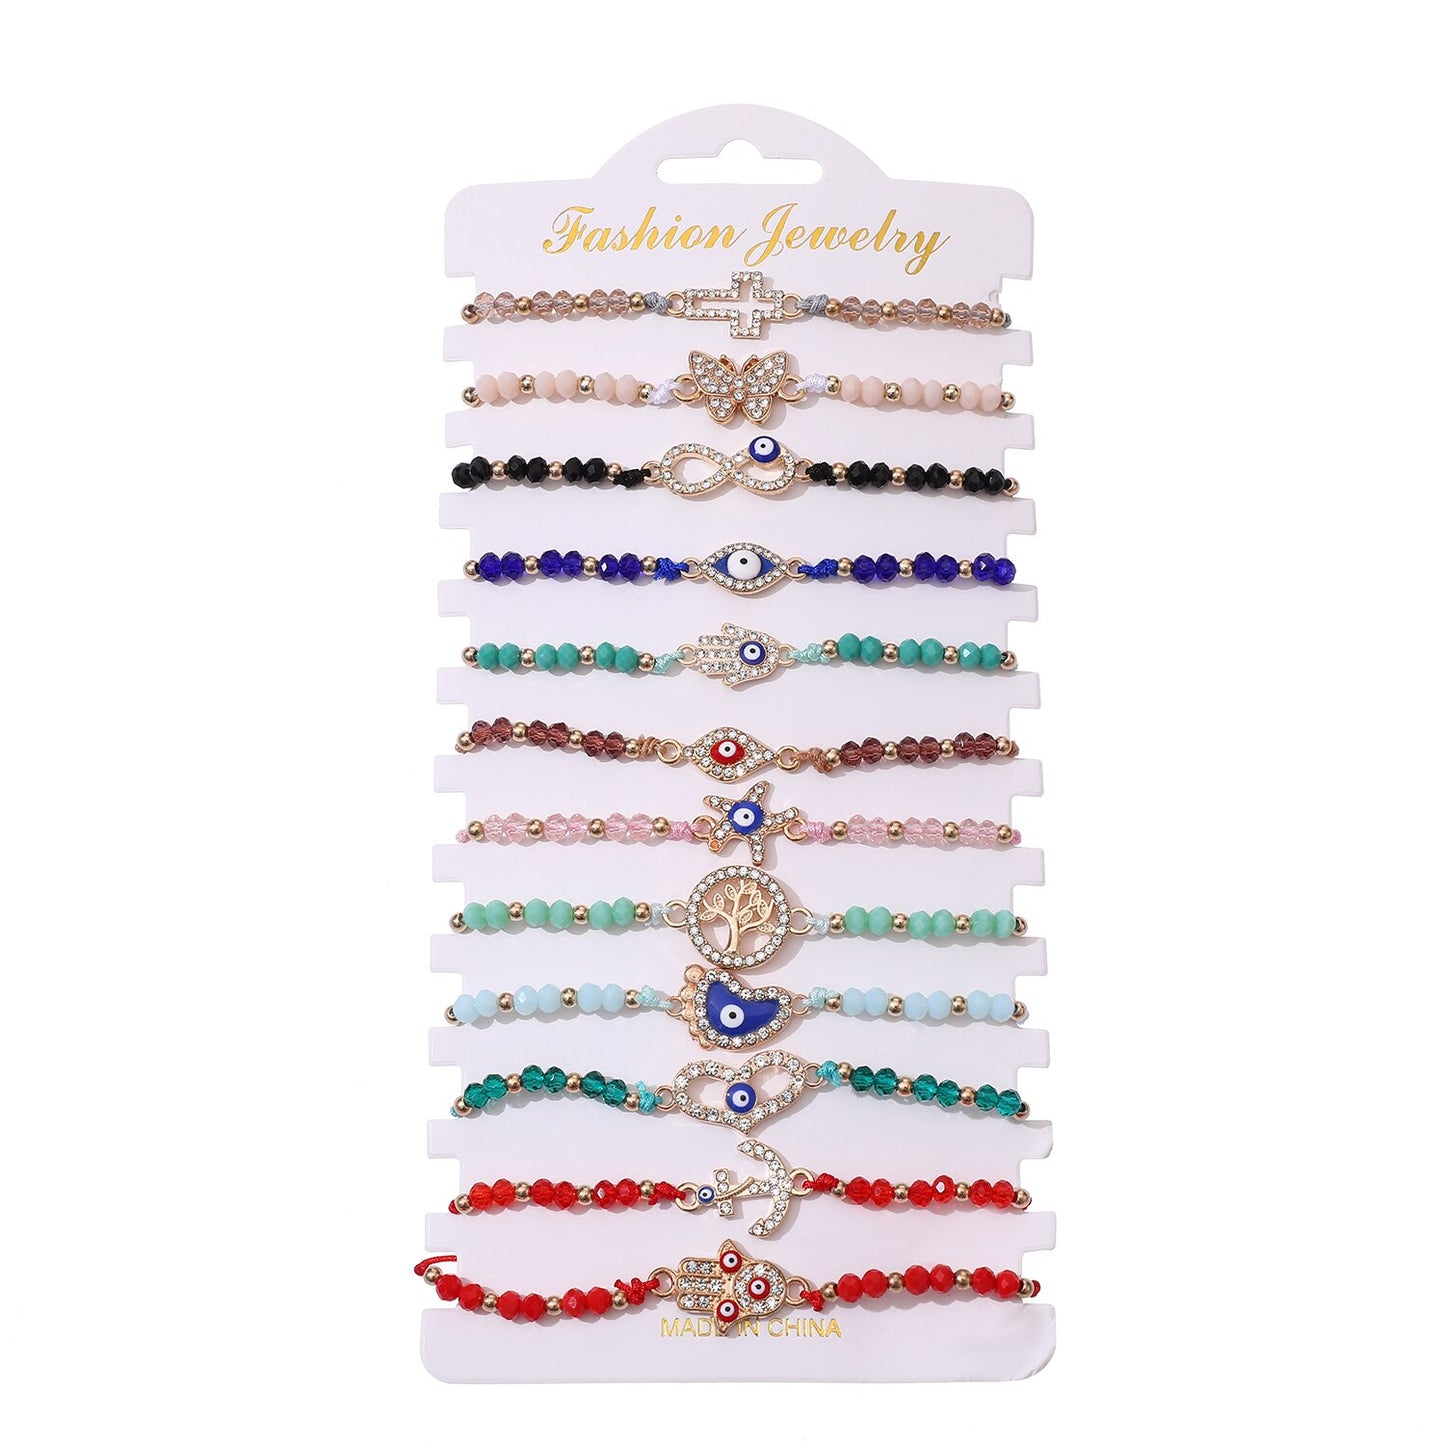 12pcs/lot Cross Knot Charms Knitted Bracelet for Women Adjustable Turkey Blue Evil Eye Crystal Beads Bracelets Anklet Jewelry